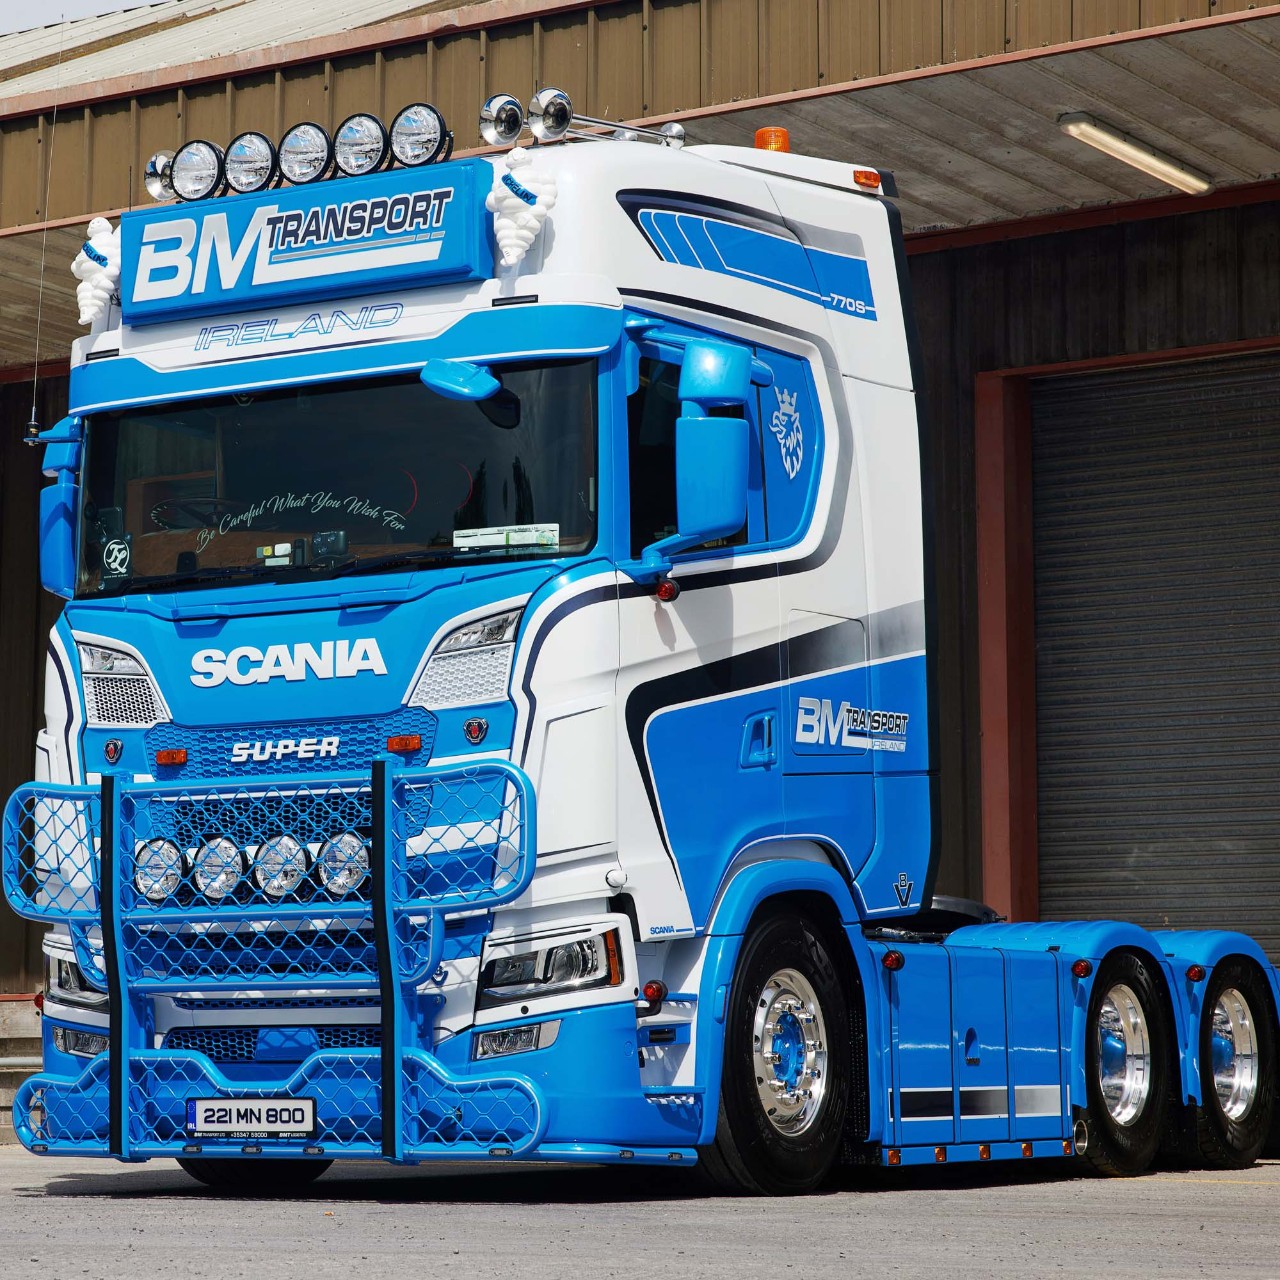 BM Transport Scania truck